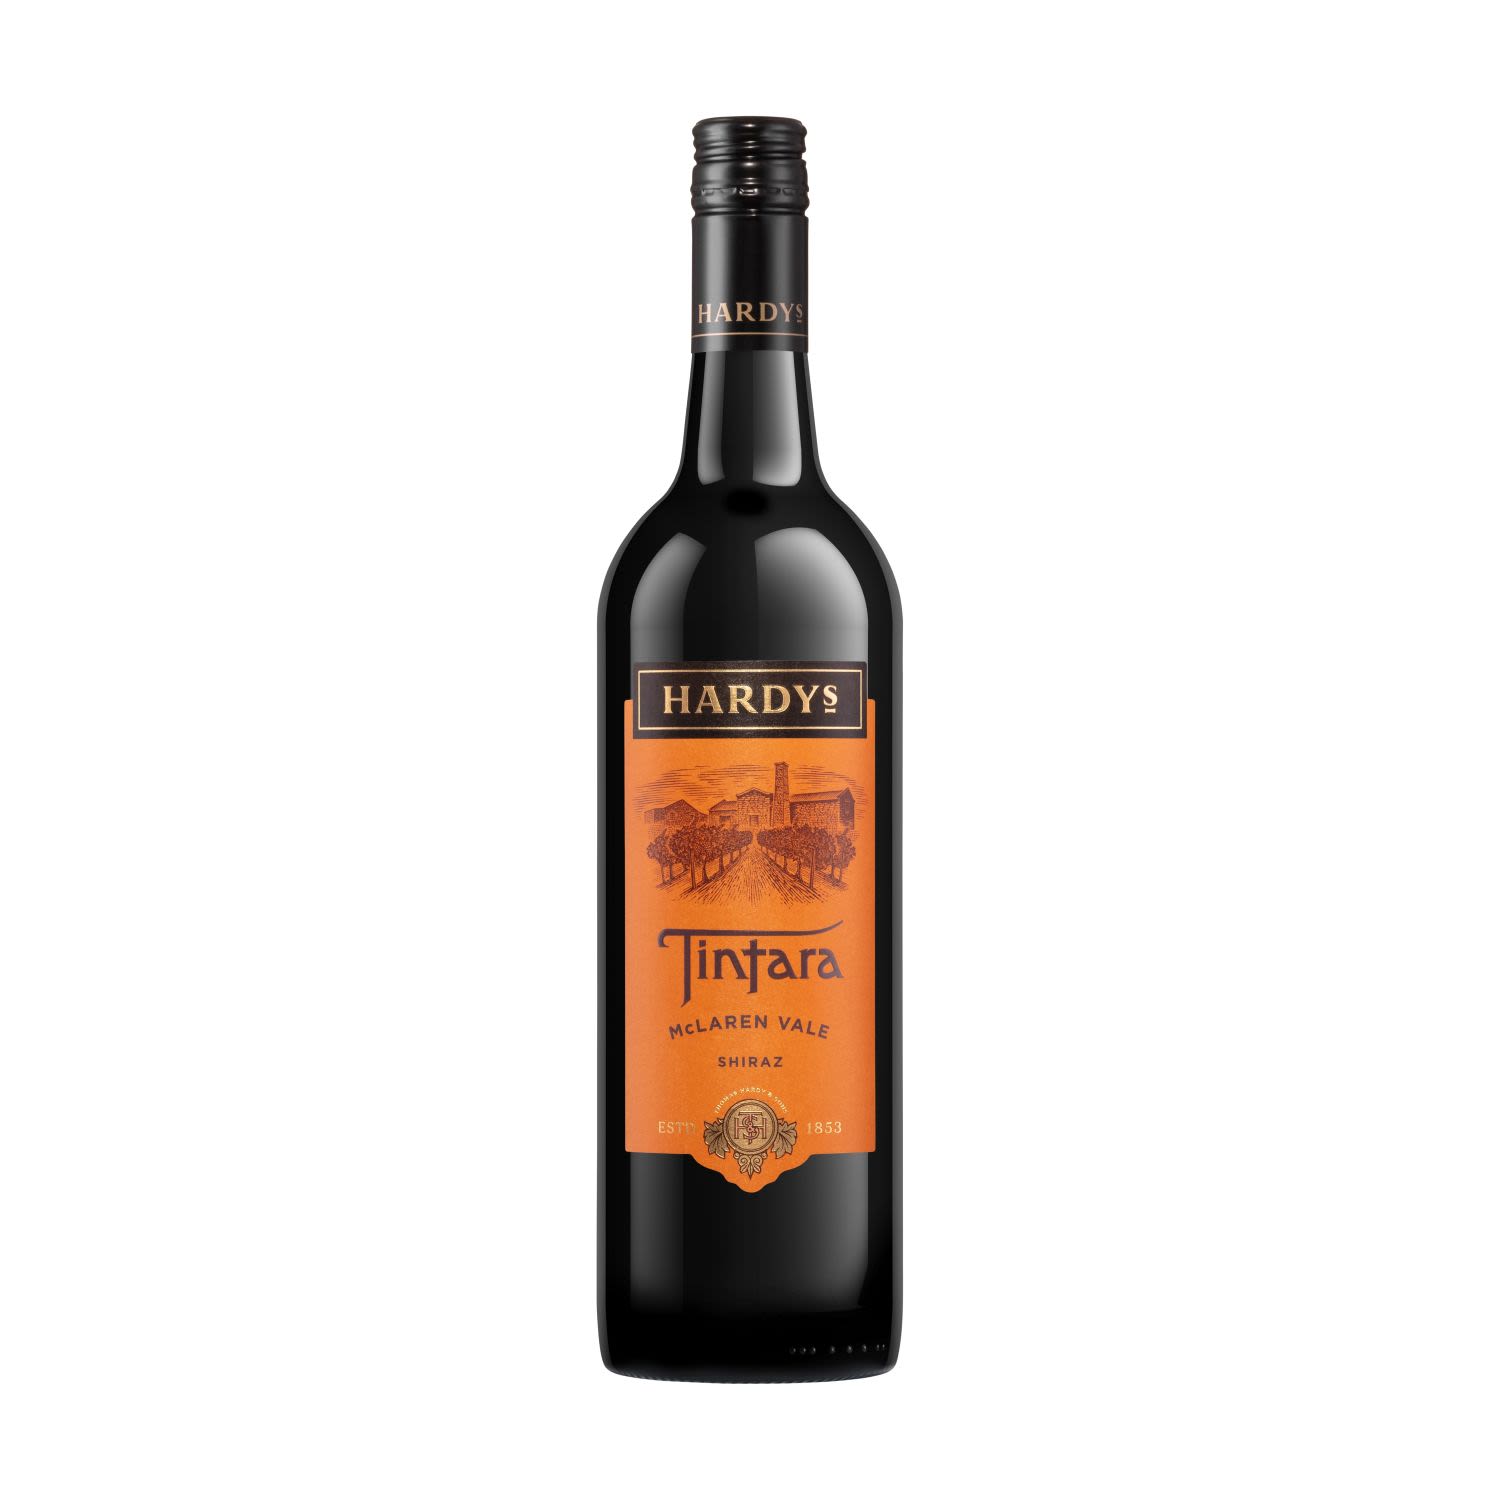 Hardys Tintara Shiraz 750mL Bottle